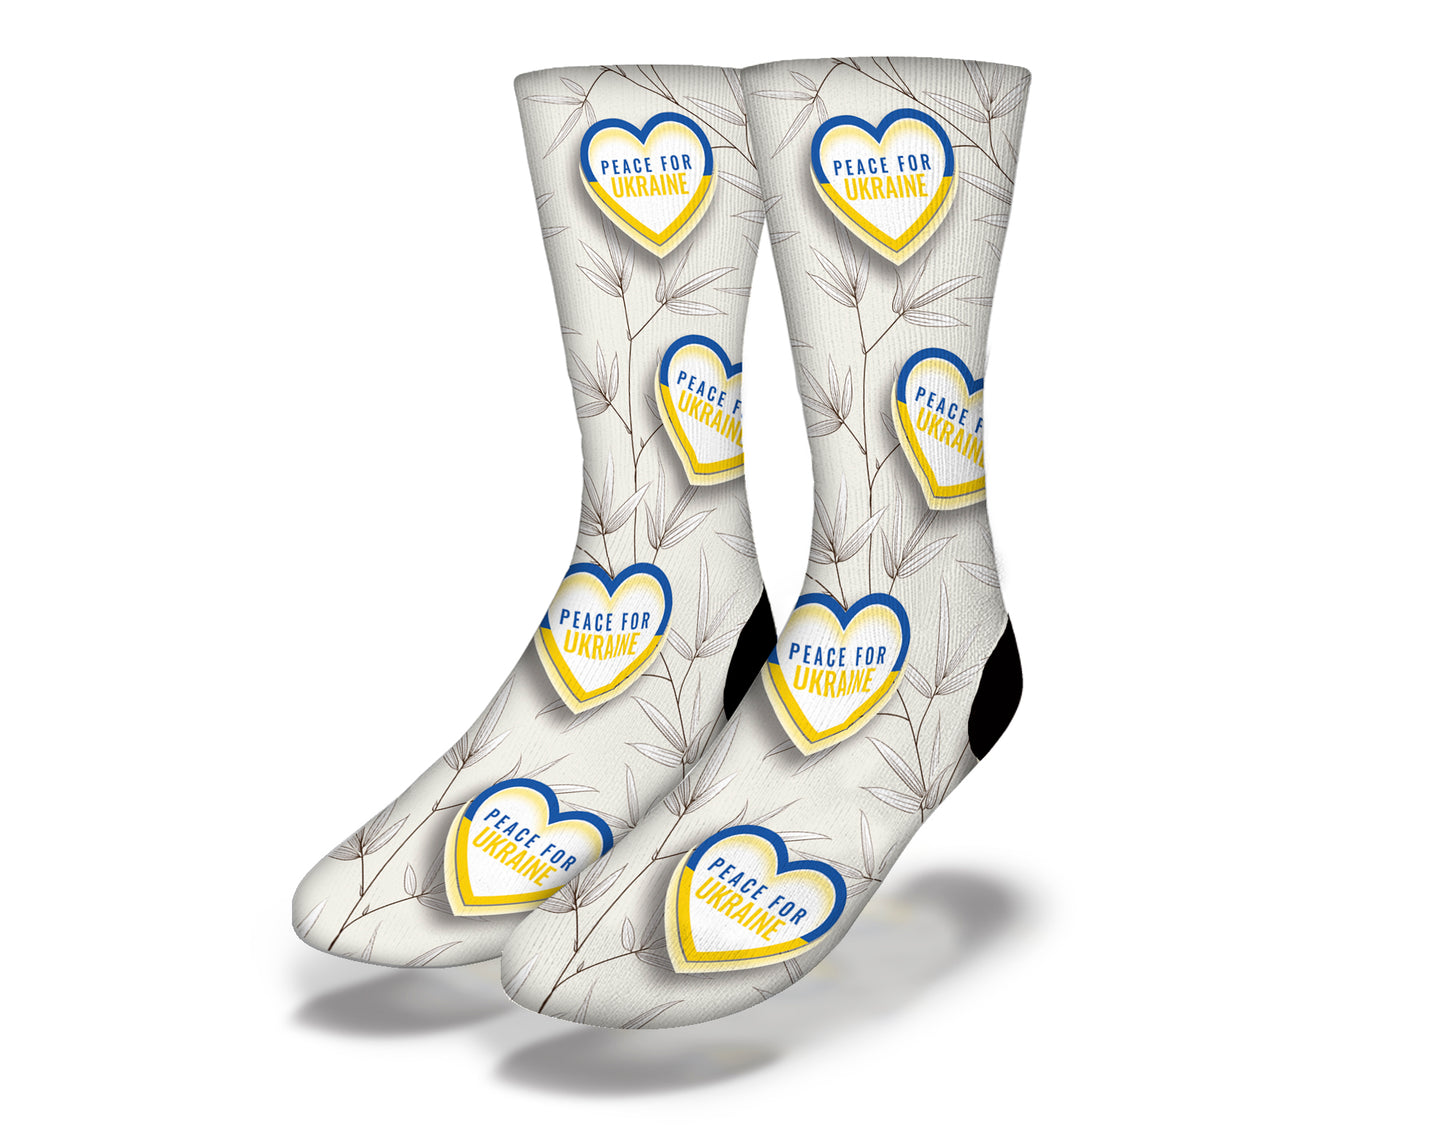 PEACE FOR UKRAINE Social Cause Socks